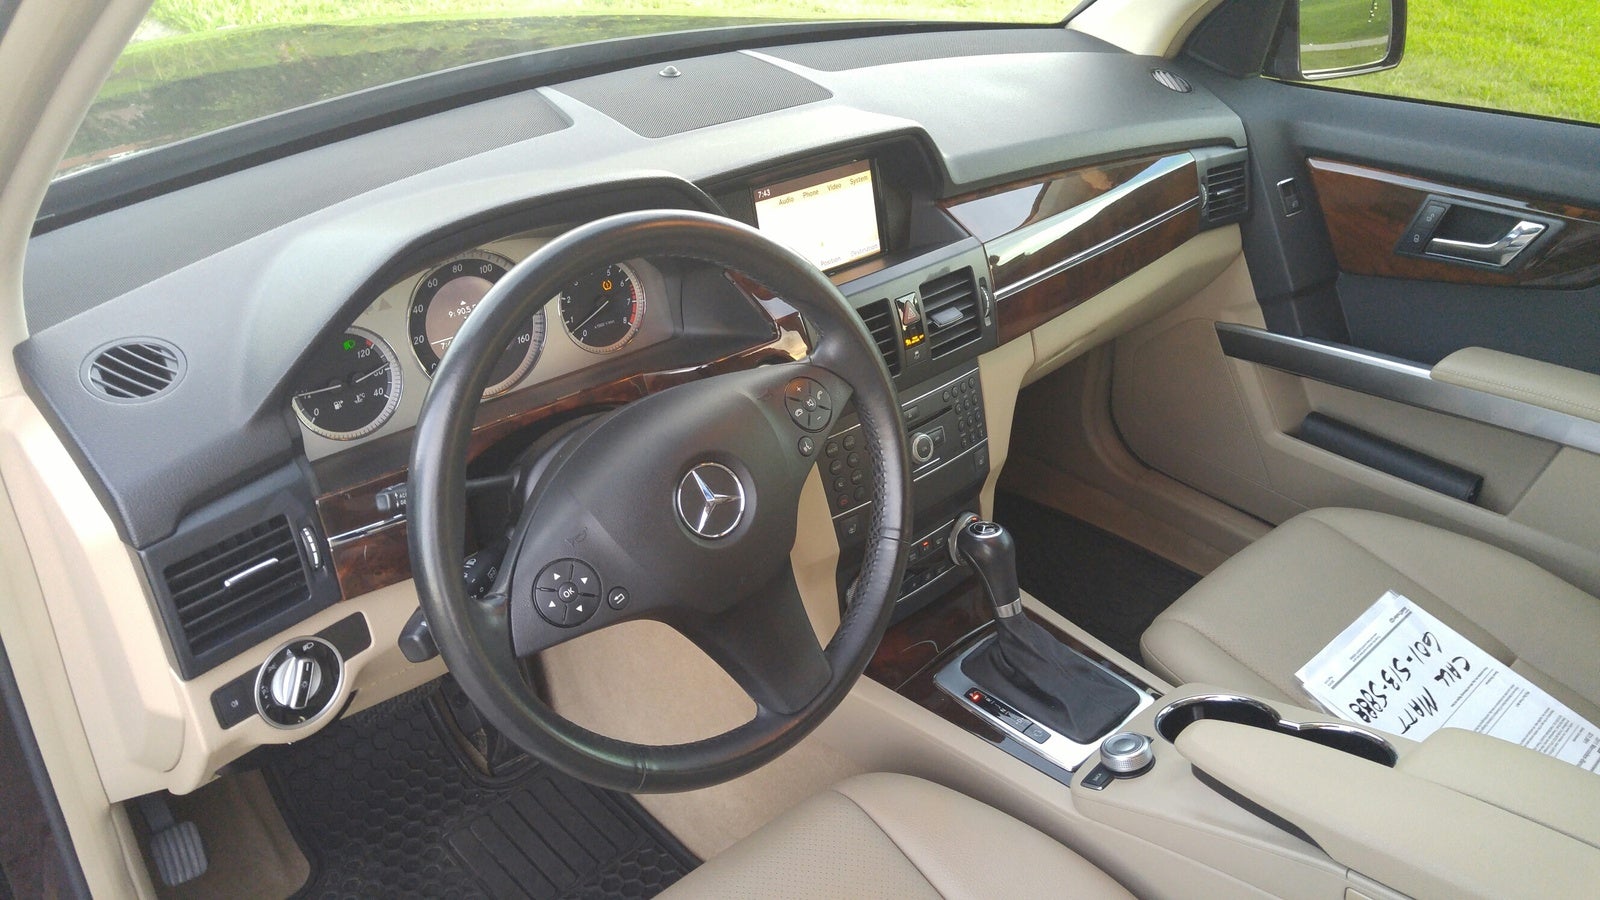 2011 Mercedes Benz Glk Class Interior Pictures Cargurus